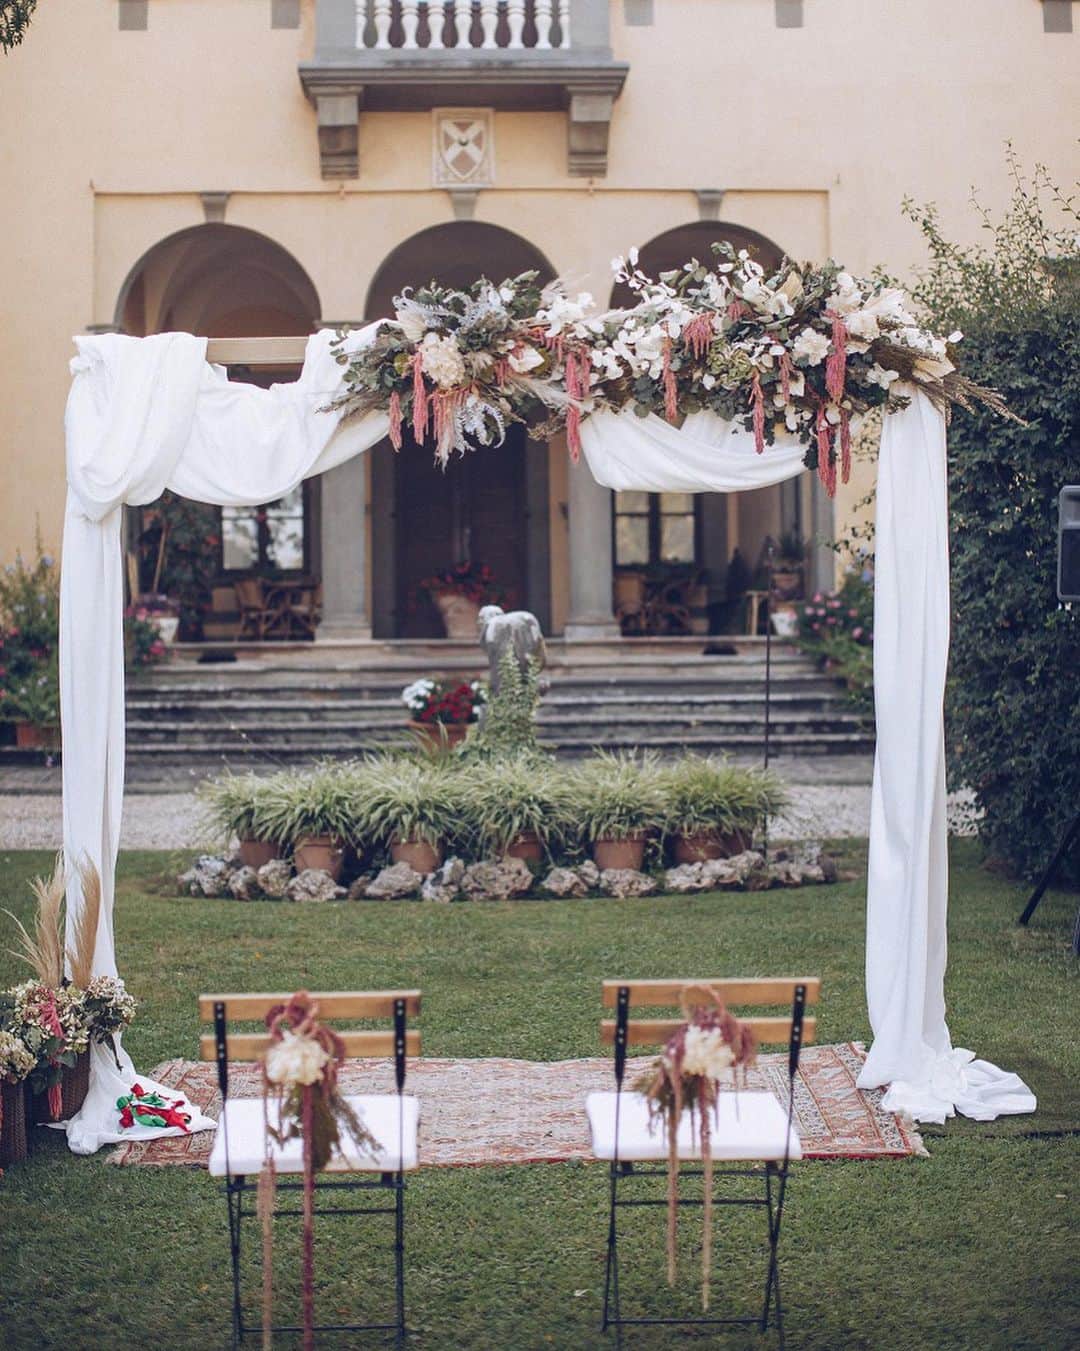 ARCH DAYS Weddingsさんのインスタグラム写真 - (ARCH DAYS WeddingsInstagram)「▽▼LUCCA GARDEN WEDDING▽▼﻿ ﻿ イタリア・トスカーナ州のルッカで行われたウェディング。﻿ ﻿ 新郎の母国であるイタリアの結婚式は、夕方にスタートし、朝まで夜通しお祝いするのが伝統的なスタイル。セレモニー、立食、ディナーのあとには、楽しいダンスパーティーを。﻿ ﻿ 会場となったヴィラは、ルネッサンス期に建てられた歴史ある邸宅。その雰囲気を活かしてシンプルに飾り付けられた、スモーキーカラーのガーデン装花もとびきりおしゃれ。﻿ ﻿ ﻿ Bride : @a_a.t3﻿ Planner : @excibus_banqueting﻿ ﻿ ﻿ ▽このALBUMを見るにはストーリーズを☑️﻿ LUCCA GARDEN WEDDING﻿ ﻿ ﻿ ▽ARCH DAYSトップページはこちらから☑﻿ @archdays_weddings﻿ プロフィールのリンクから👰🏻﻿ ﻿ ﻿ ▽バースデー・ベビーシャワーなどの情報を見るなら💁🎉﻿ @archdays﻿ ﻿ ﻿ ----------------------﻿ #archdays #archdays_wedding #アーチデイズ #アーチデイズウェディング #archdays花嫁 #イタリア #イタリア挙式 #イタリアウェディング #イタリアウェディングフォト #イタリア結婚式 #イタリアトスカーナ #トスカーナ #トスカーナ州 #海外ウェディング #海外ウエディング #海外ウェディングフォト #海外挙式 #海外結婚式 #海外ブライダル #邸宅ウェディング #邸宅ウエディング #邸宅挙式 #ガーデンウェディング #ガーデンウエディング #ガーデン挙式 #プレ花嫁 #2020春婚 #2020夏婚 #2020秋婚 #2020冬婚﻿ ----------------------﻿ https://archdays.com/album/2019/11/13/49362﻿ ----------------------」11月13日 20時31分 - archdays_weddings